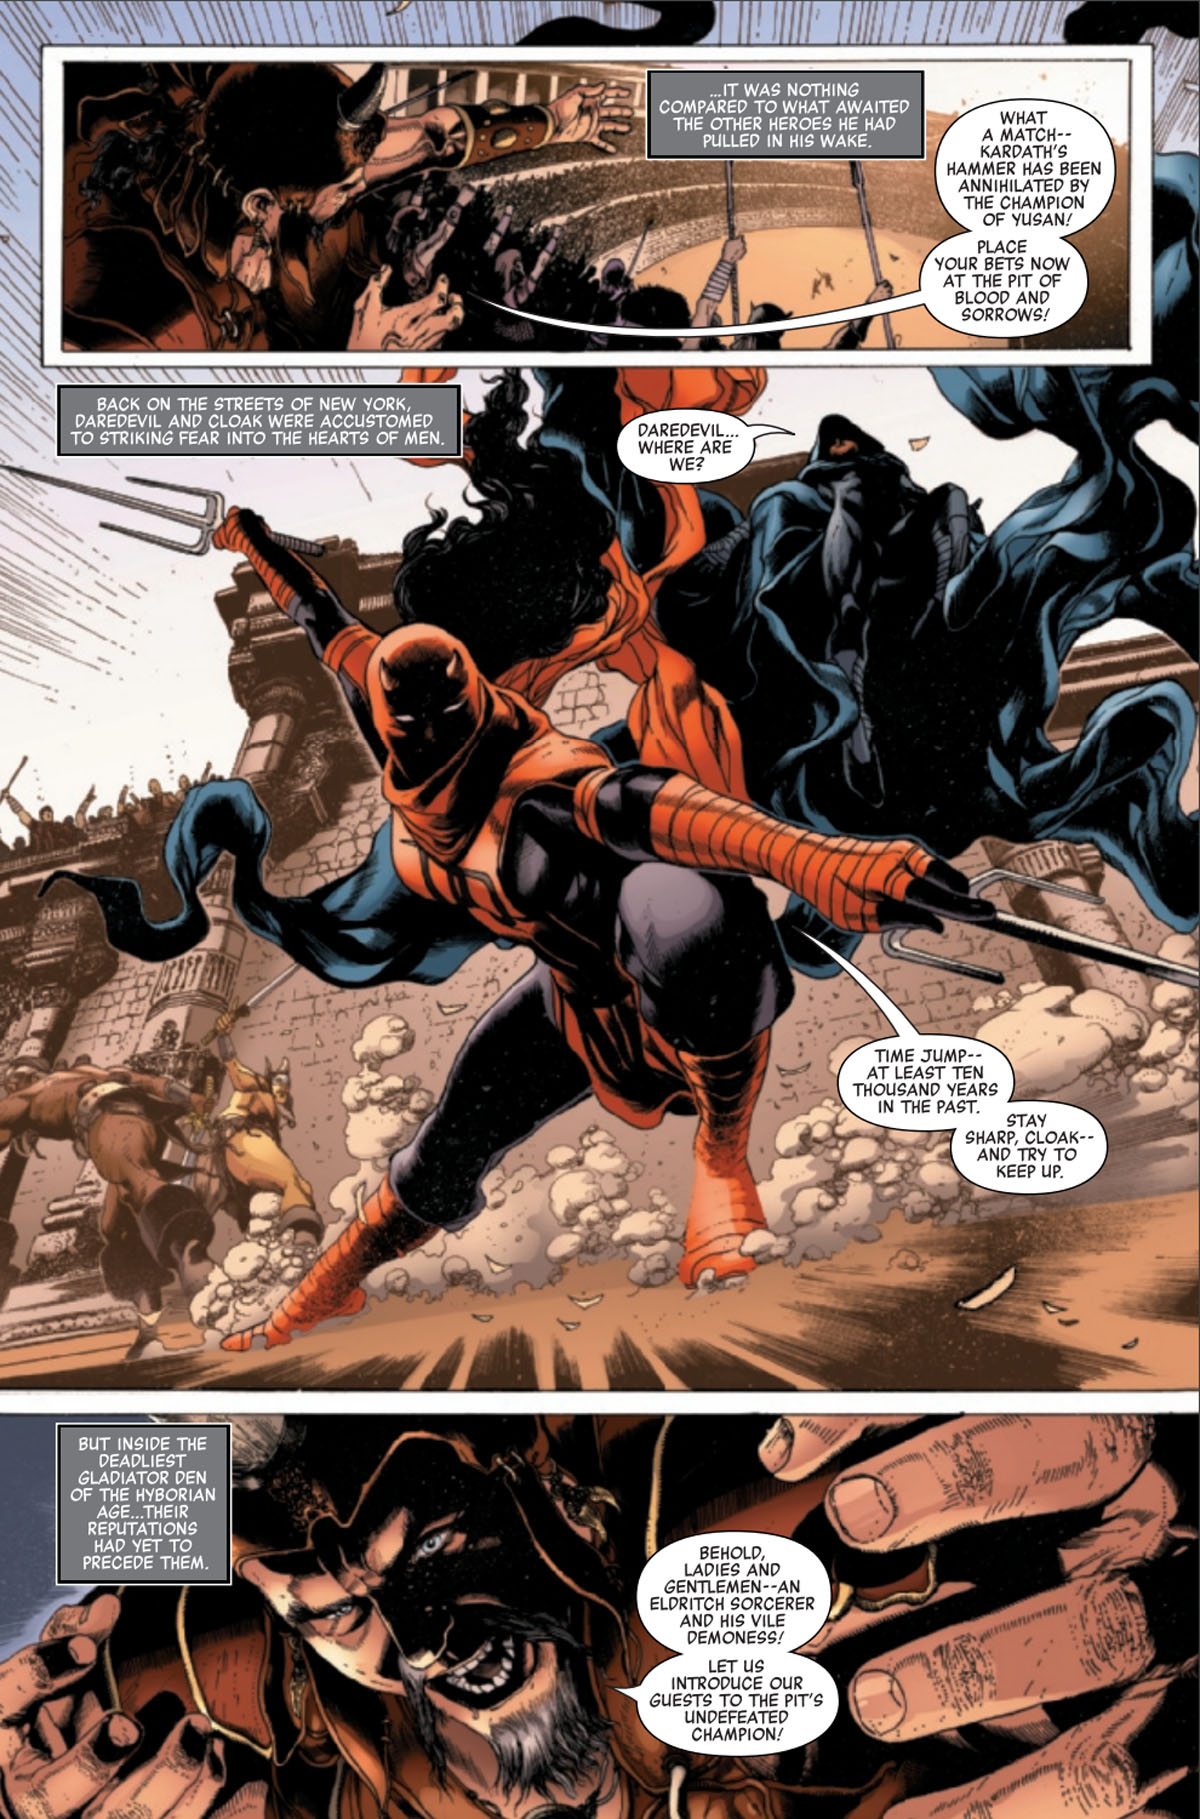 Savage Avengers #2 page 4